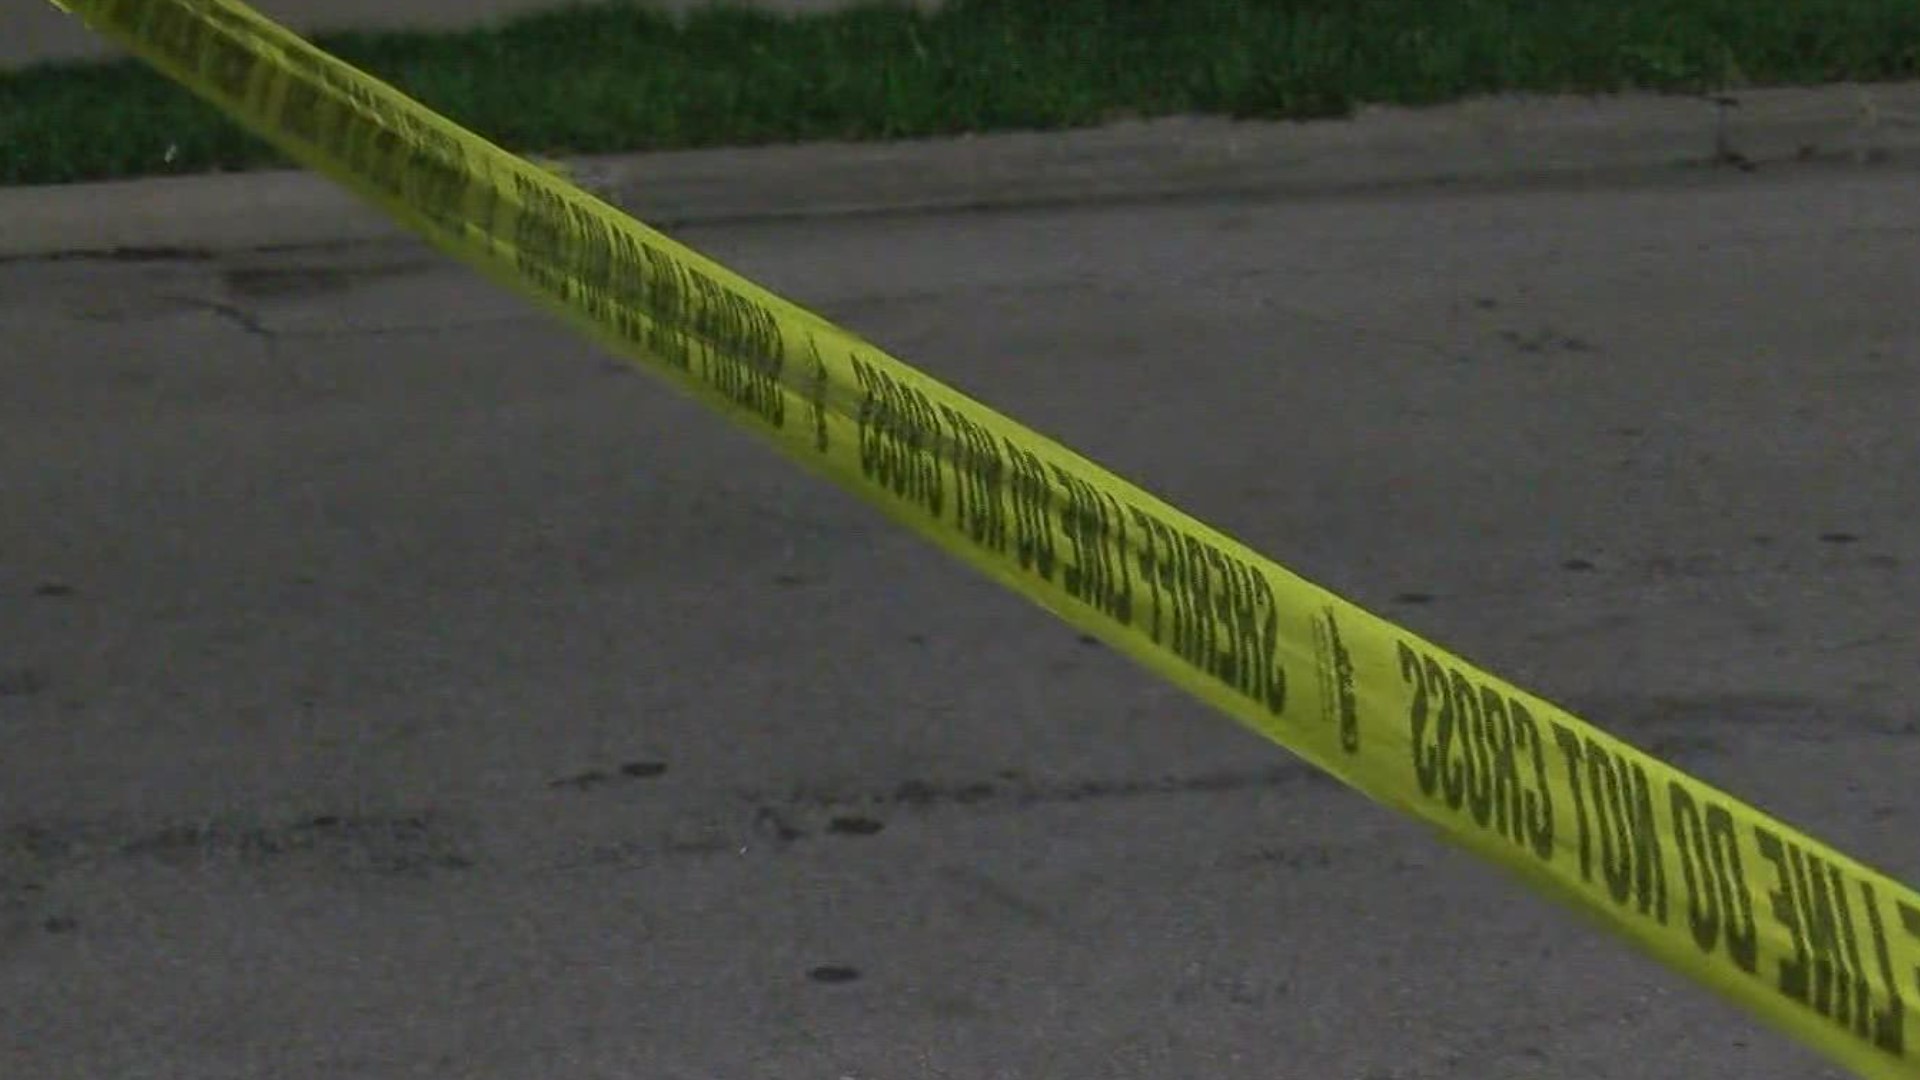 The shooting happened on Platt St. near 4th St. around 9 p.m.